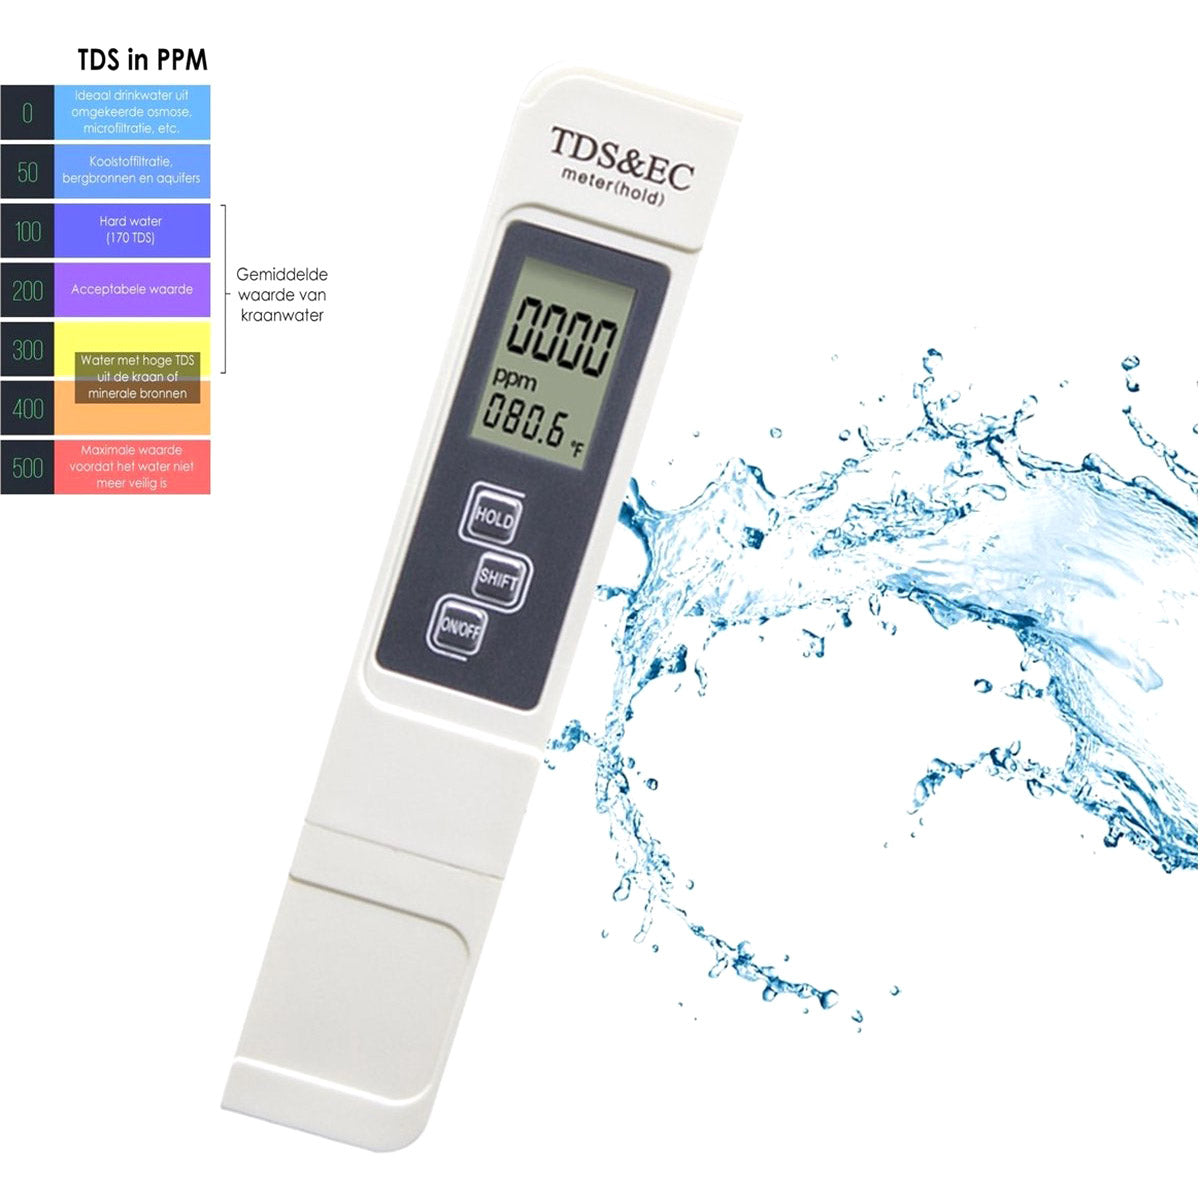 <tc>Ariko</tc> Professional Water Hardness Meter - Accurate 3-in-1 TDS, EC, and Water Temperature Meter - including battery